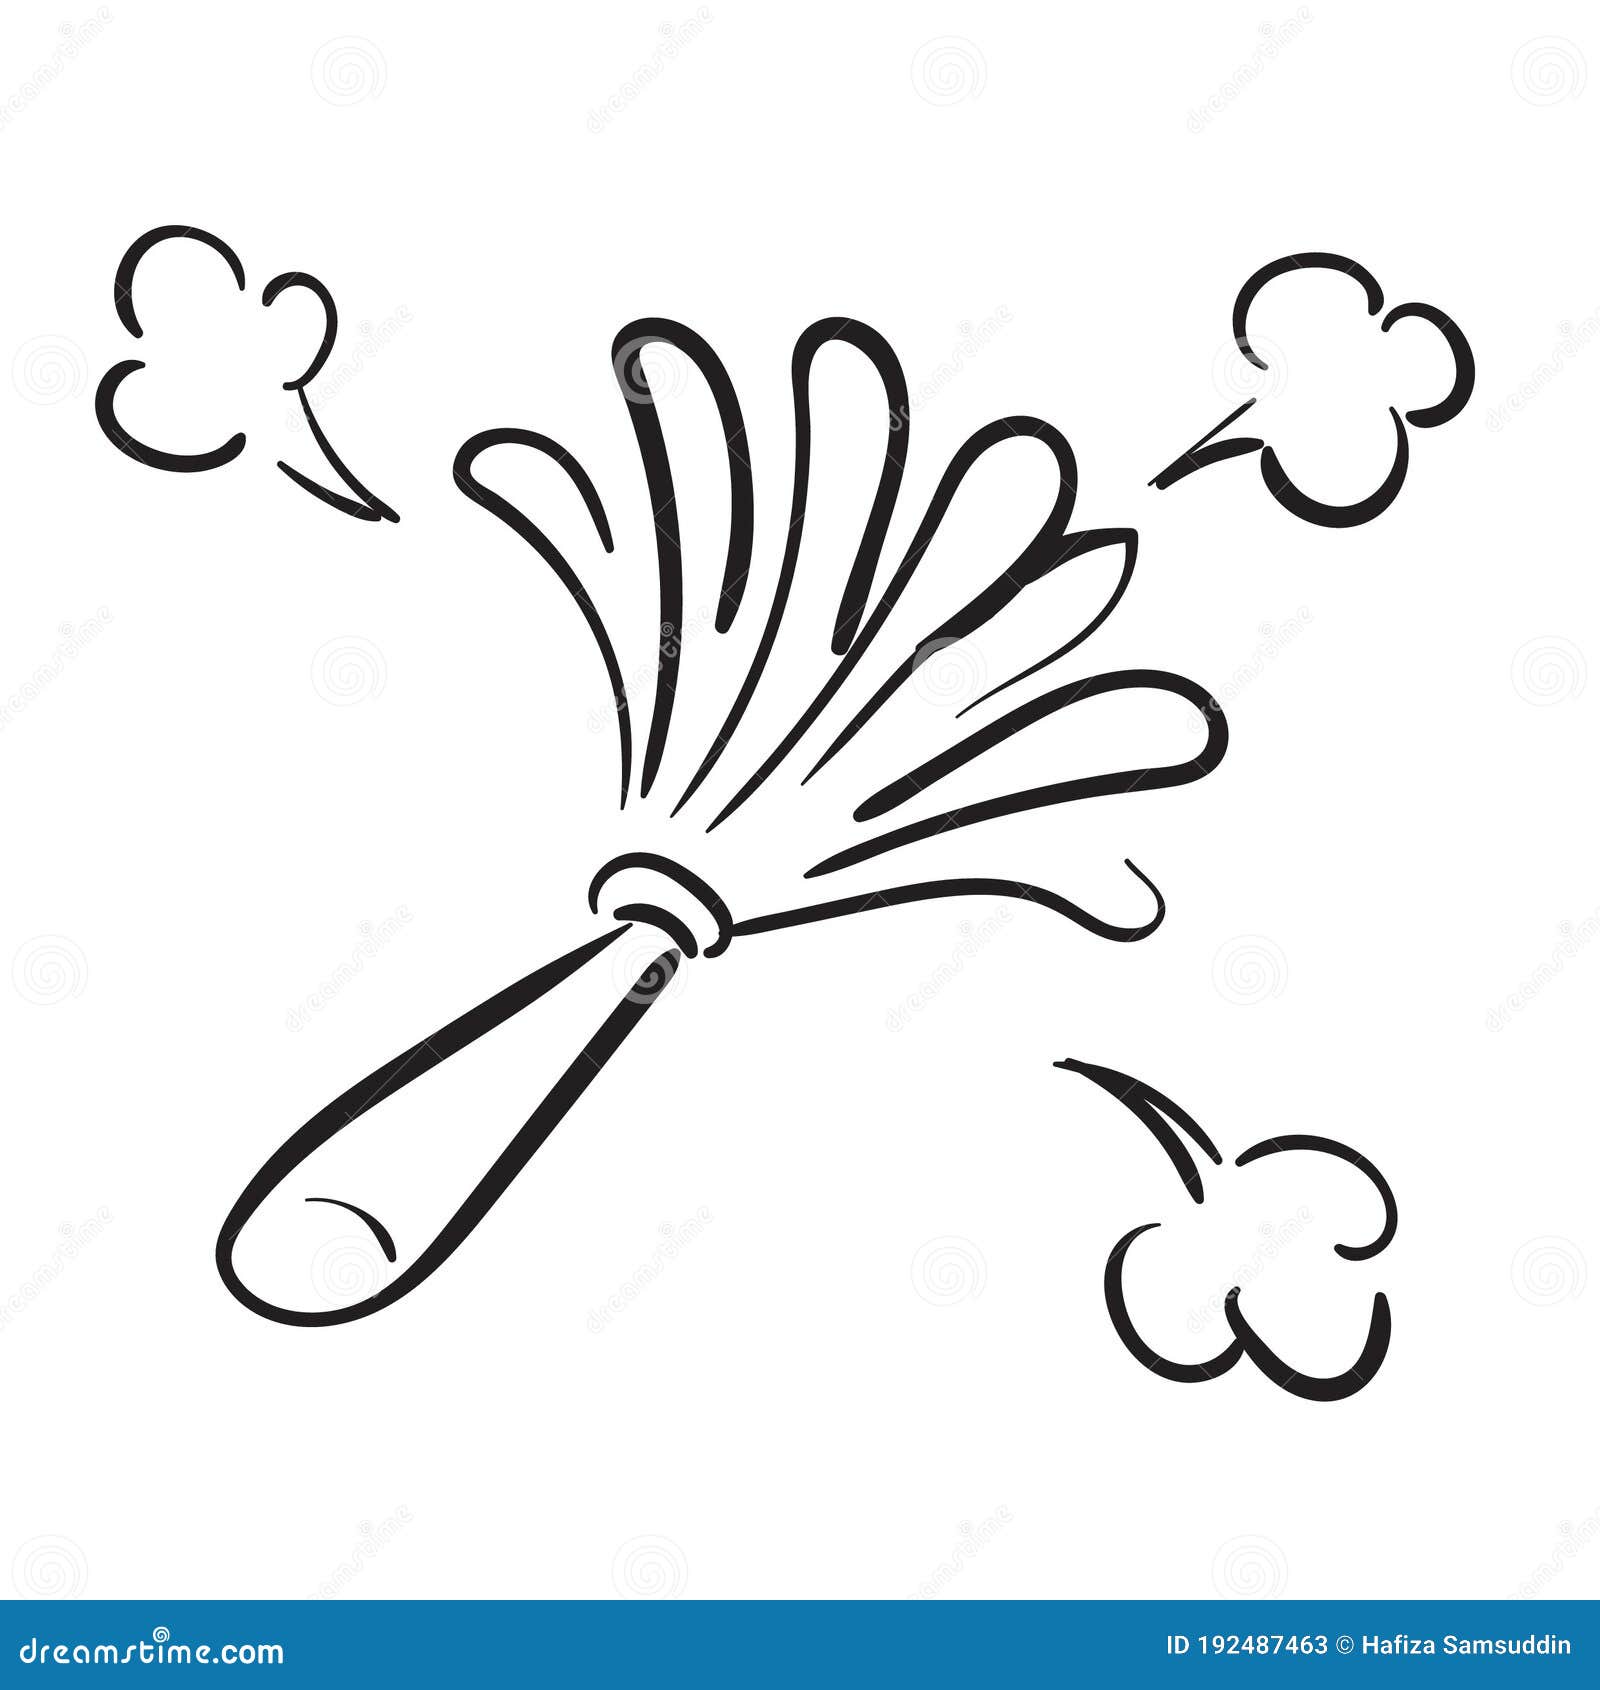 Feather duster. Vector illustration decorative design